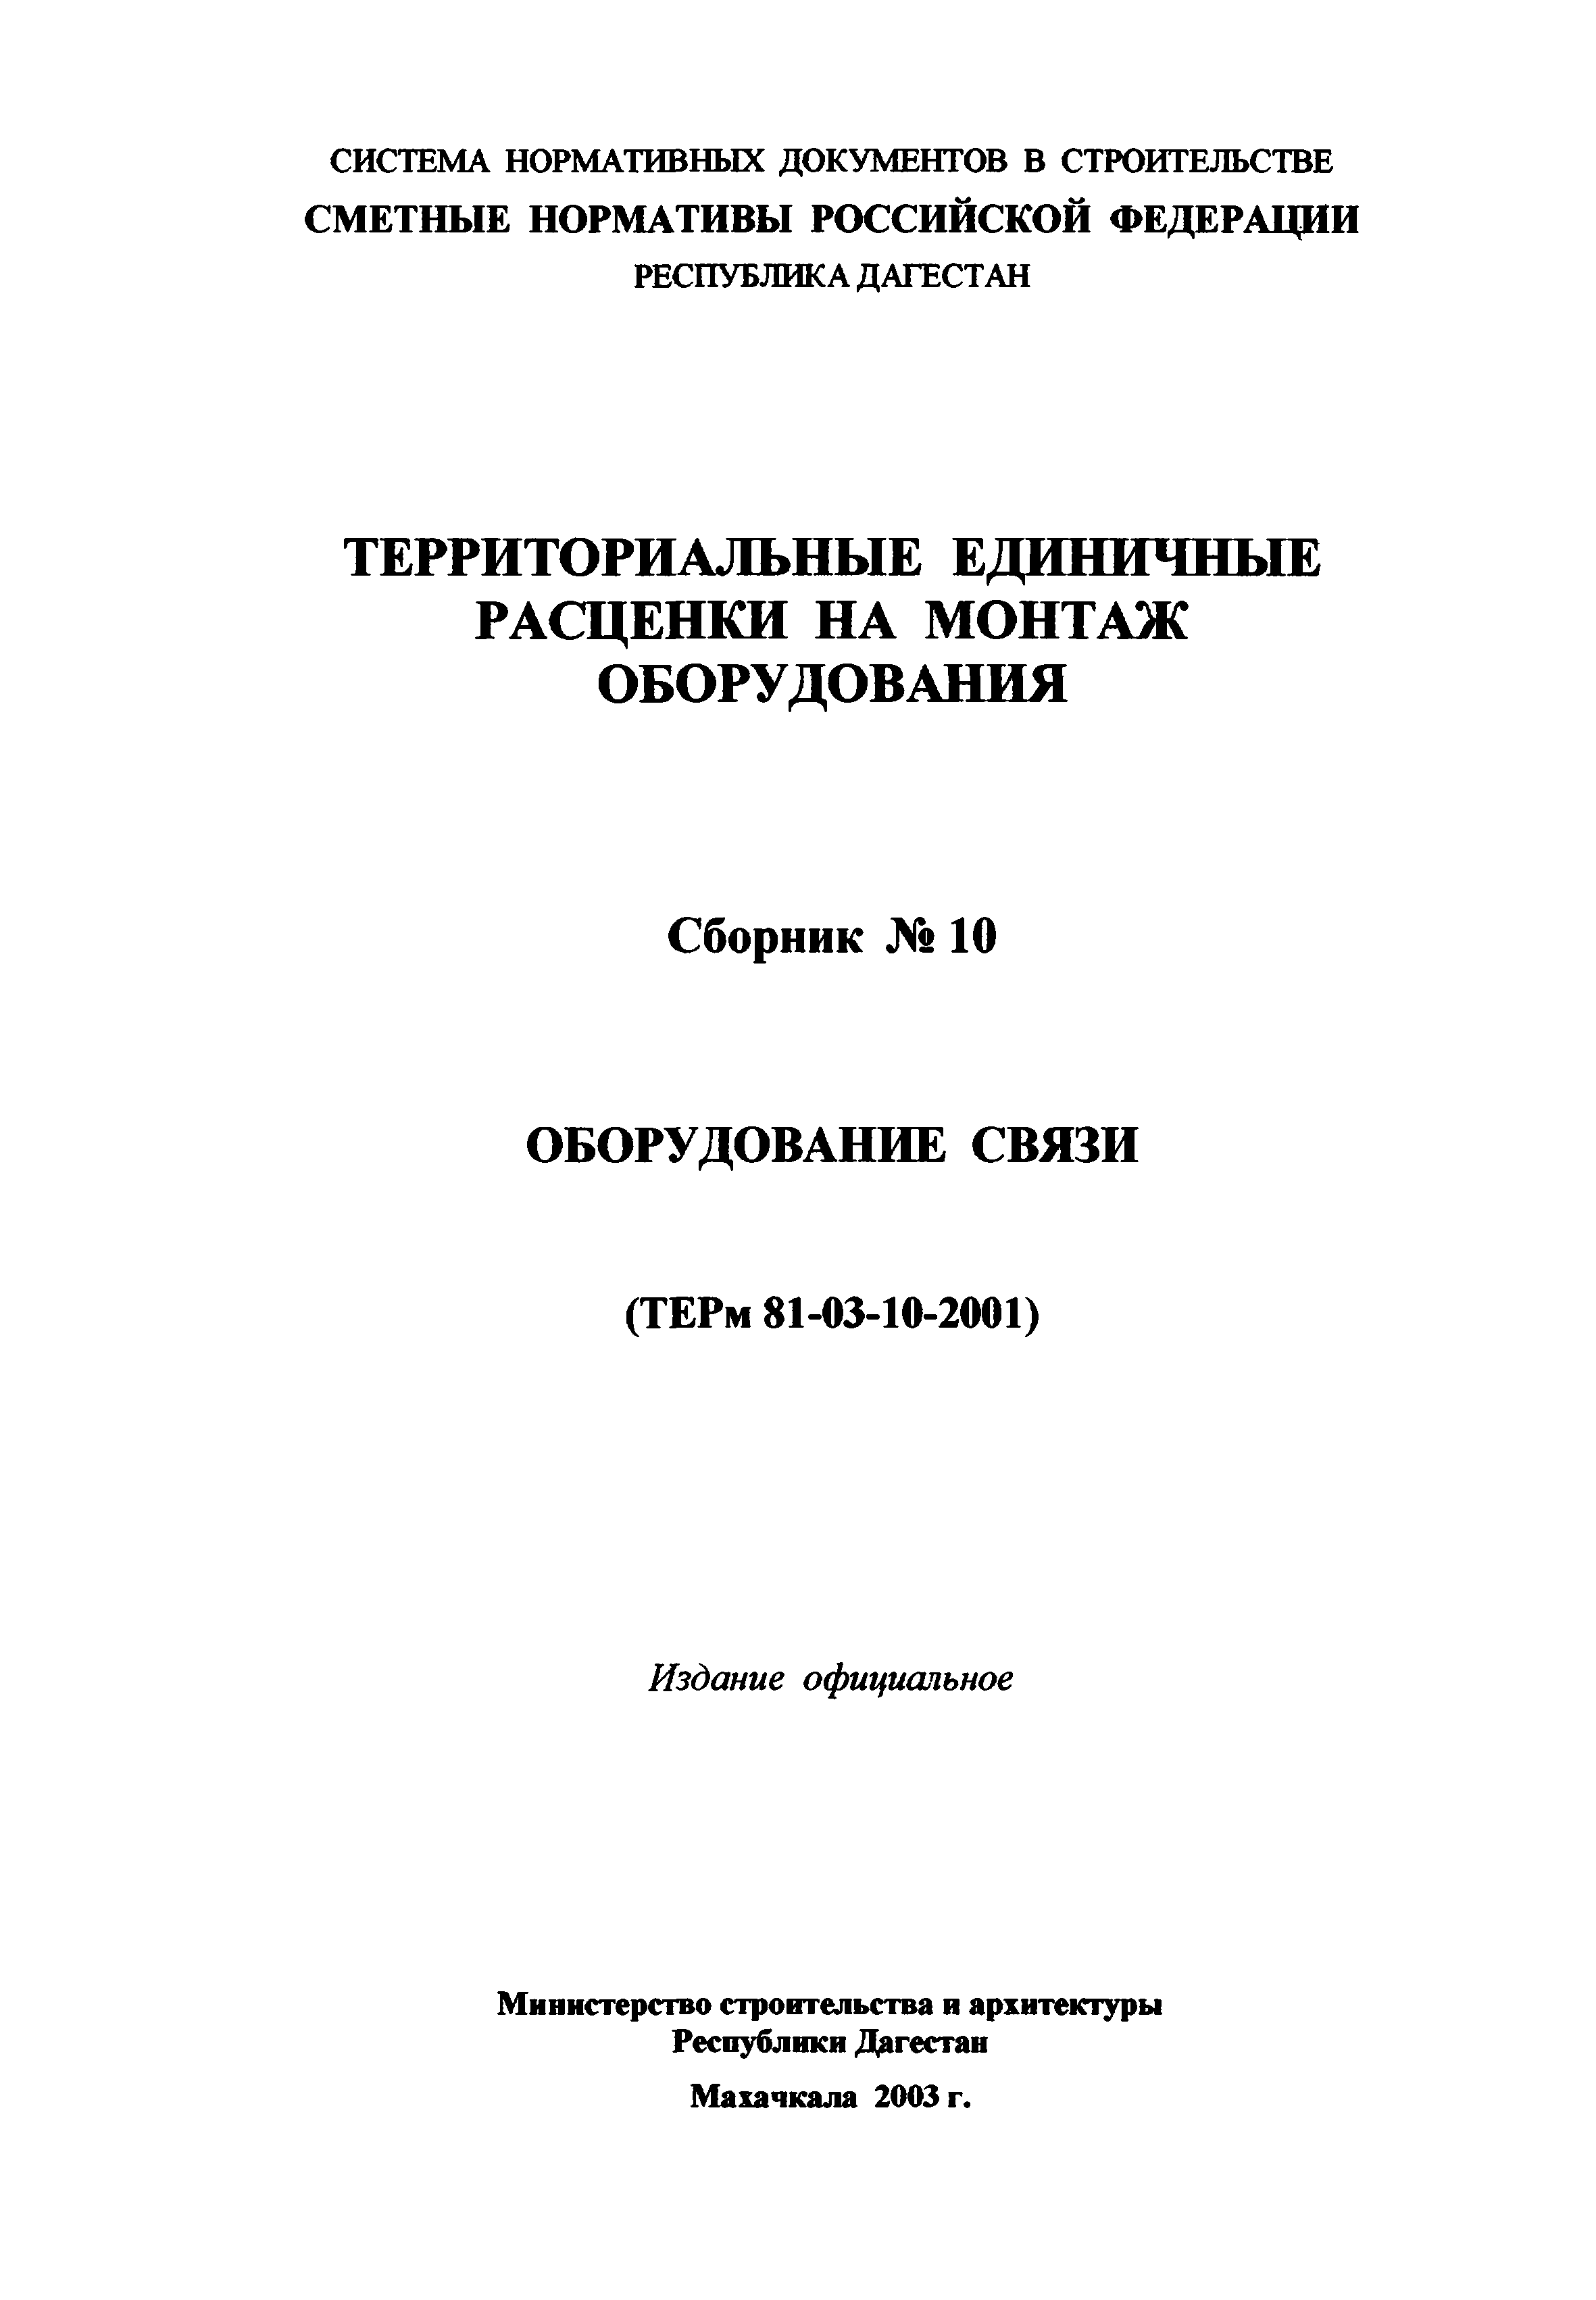 ТЕРм Республика Дагестан 2001-10